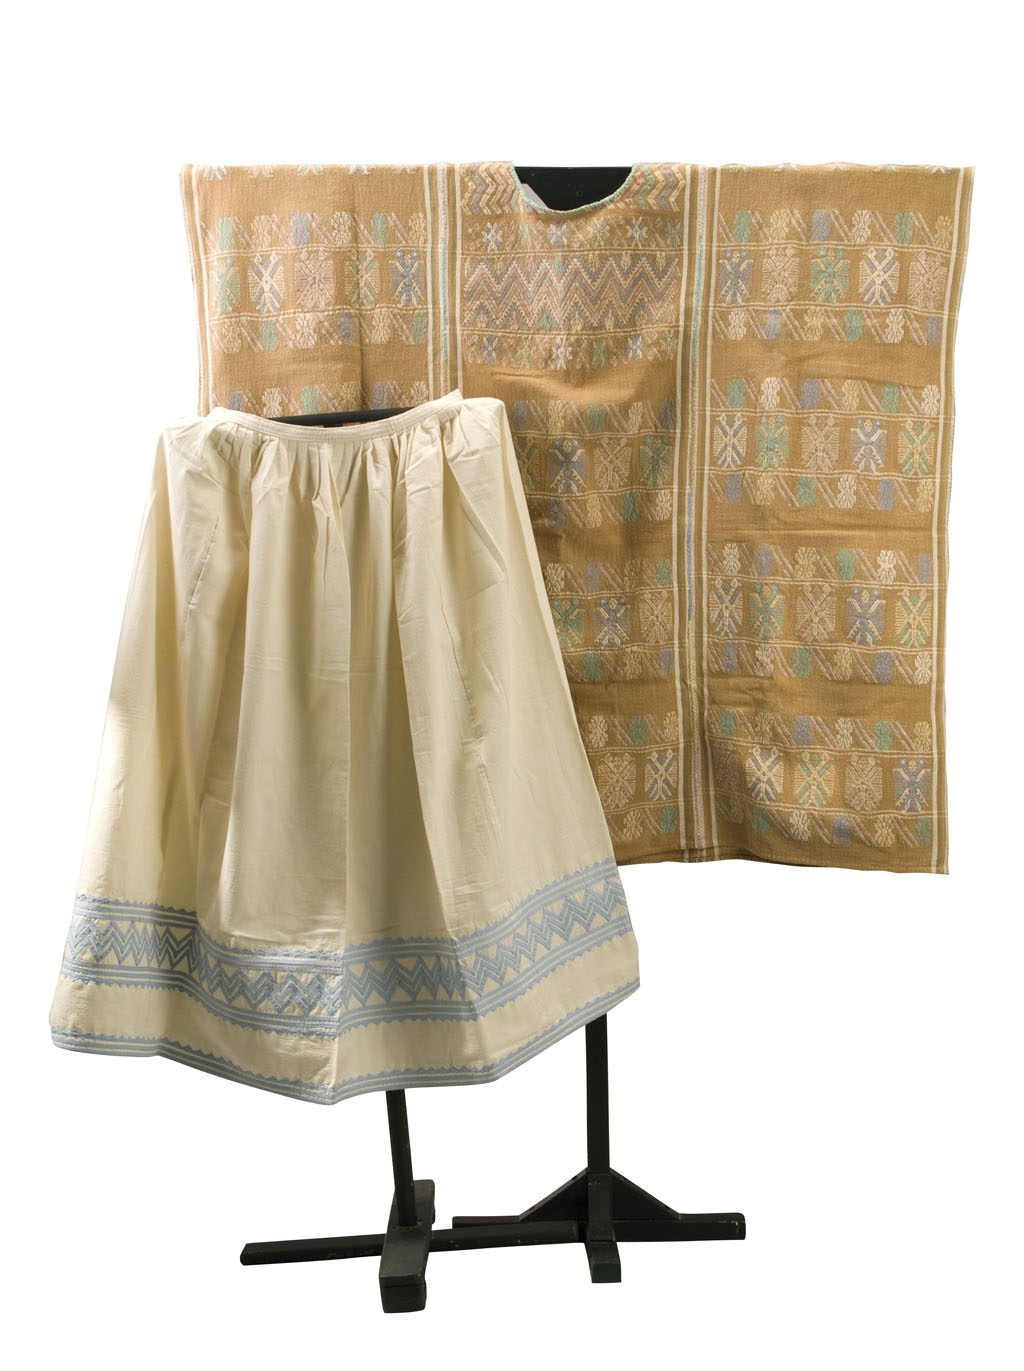 El vestido prehispánico - Mexicanísimo